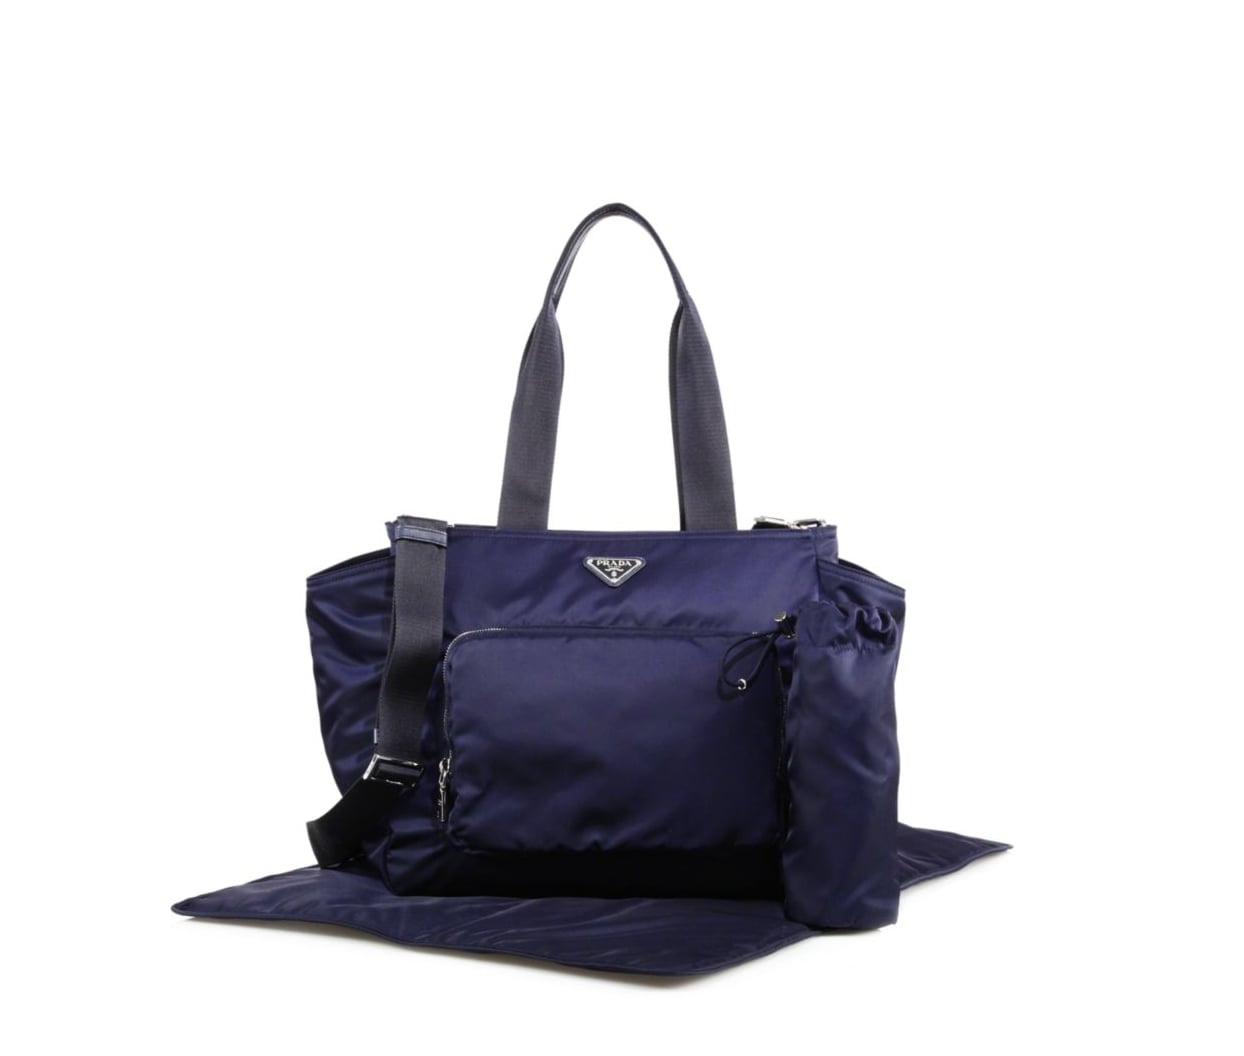 Chrissy Teigen's Prada Diaper Bag | POPSUGAR Fashion